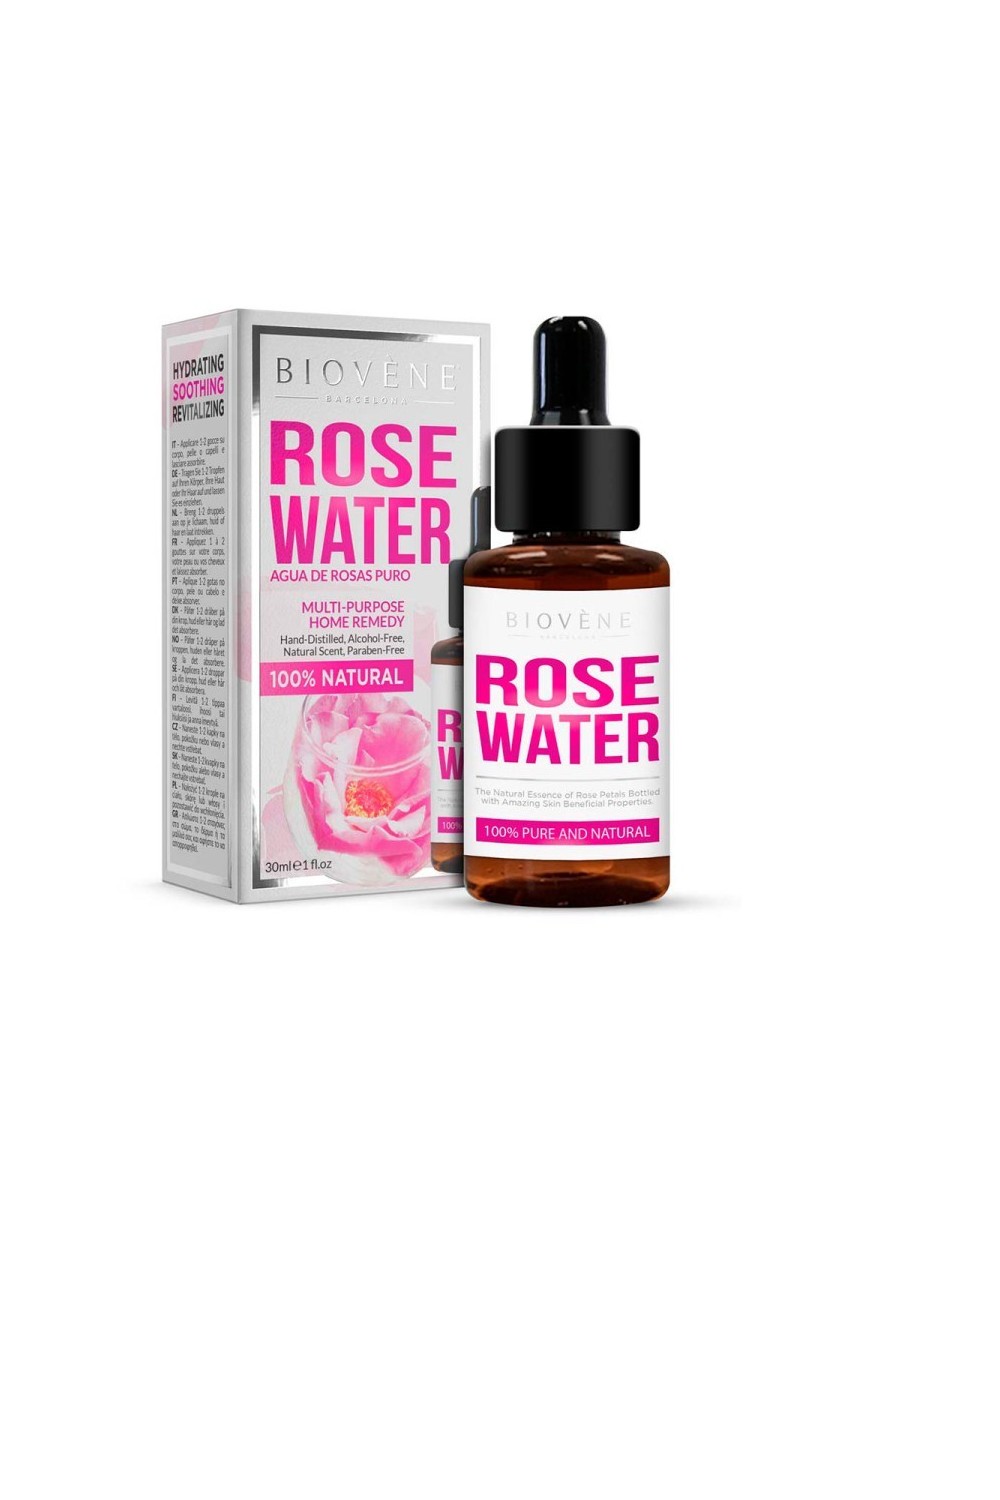 Biovene Rose Water Pure and Natural Multi-Purpose Home Remedy 30ml